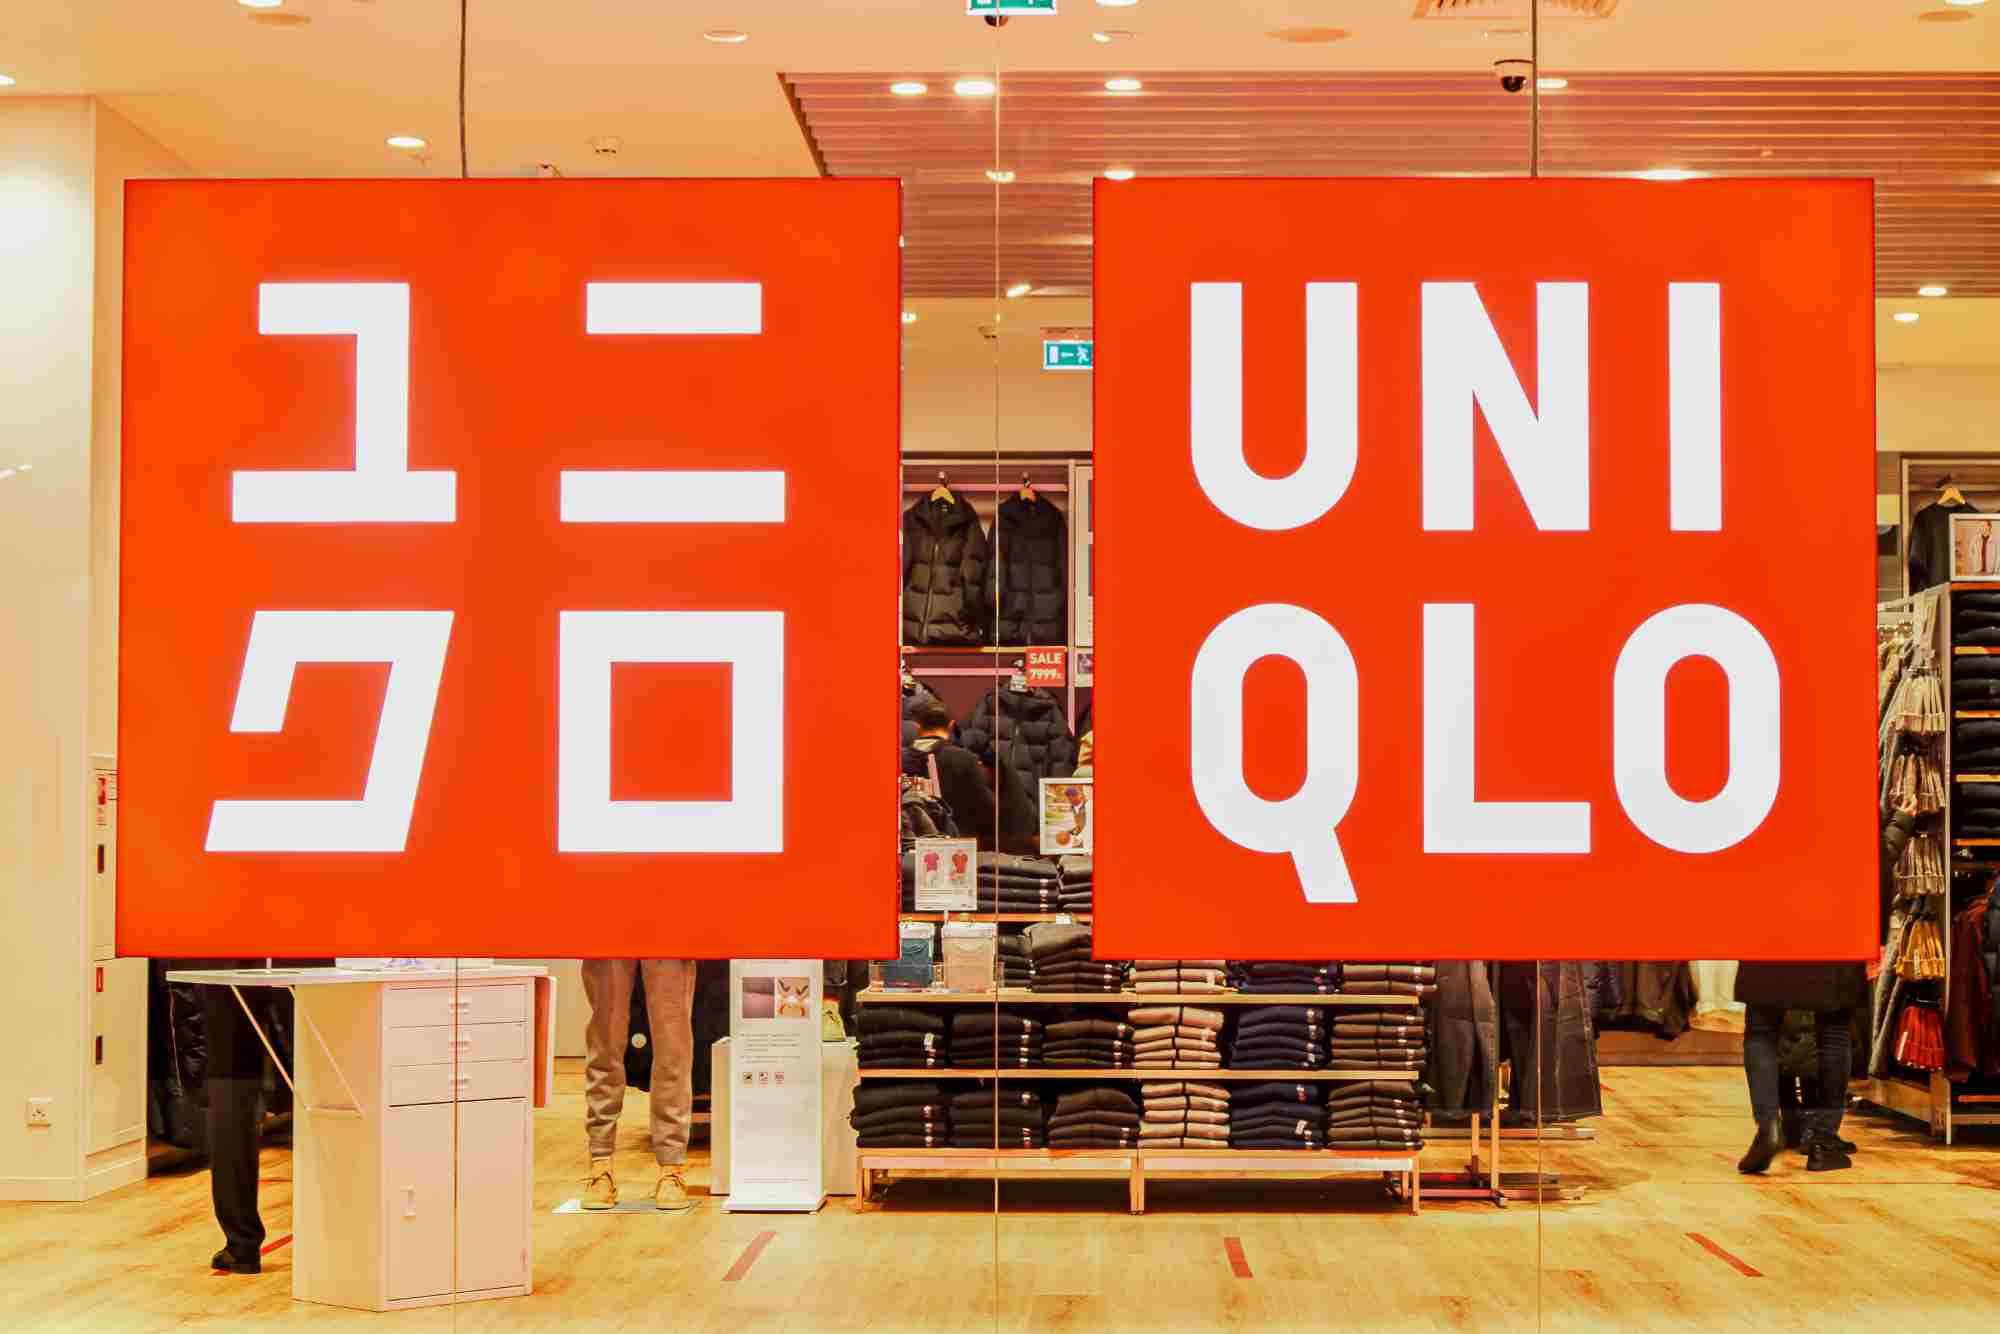 Uniqlo logo in English and Japanese at a Uniqlo store